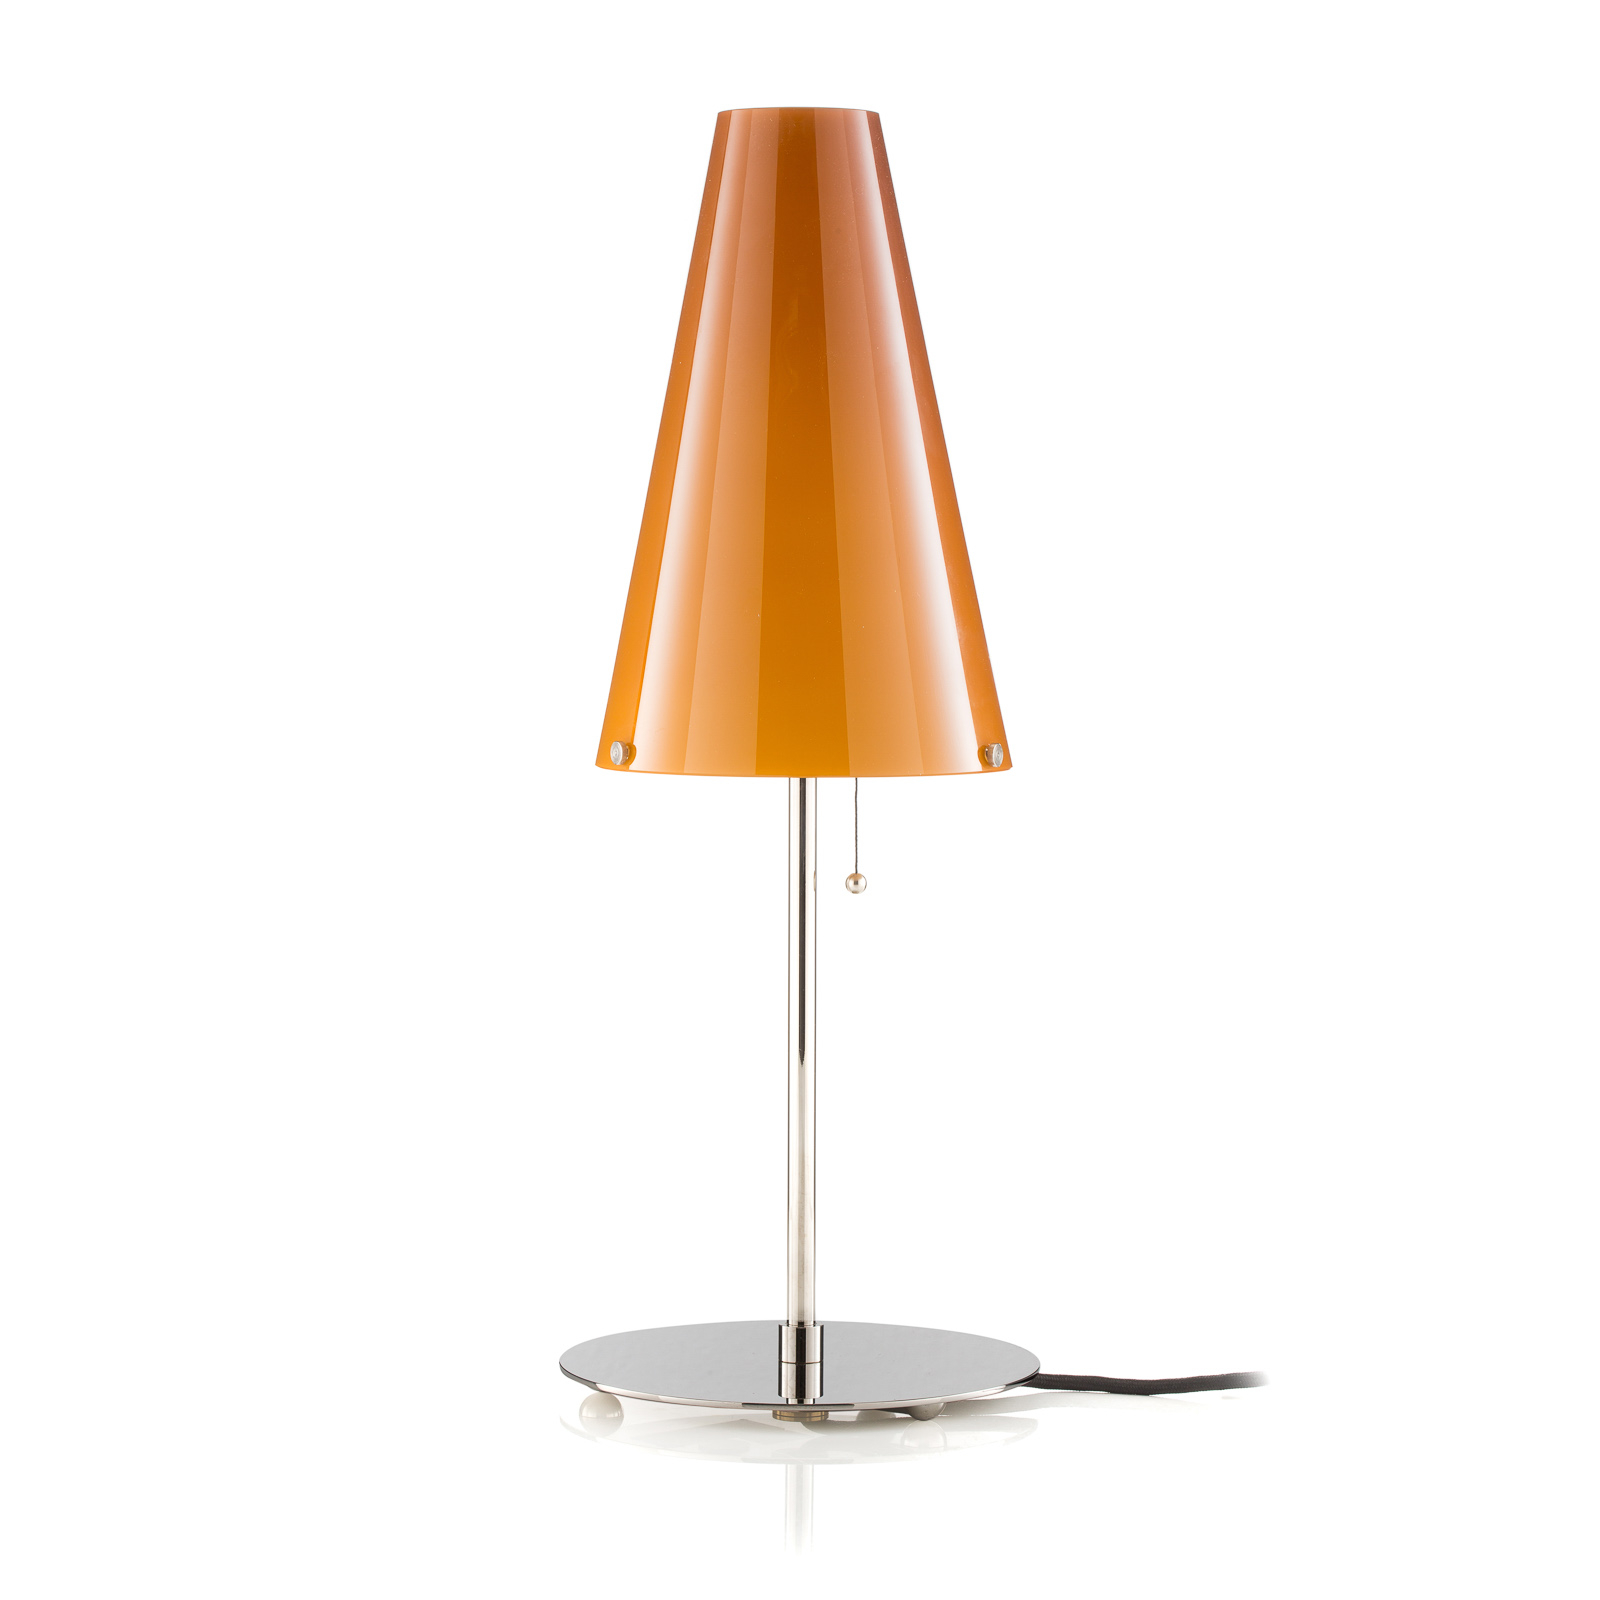 TECNOLUMEN Walter Schnepel table lamp, orange